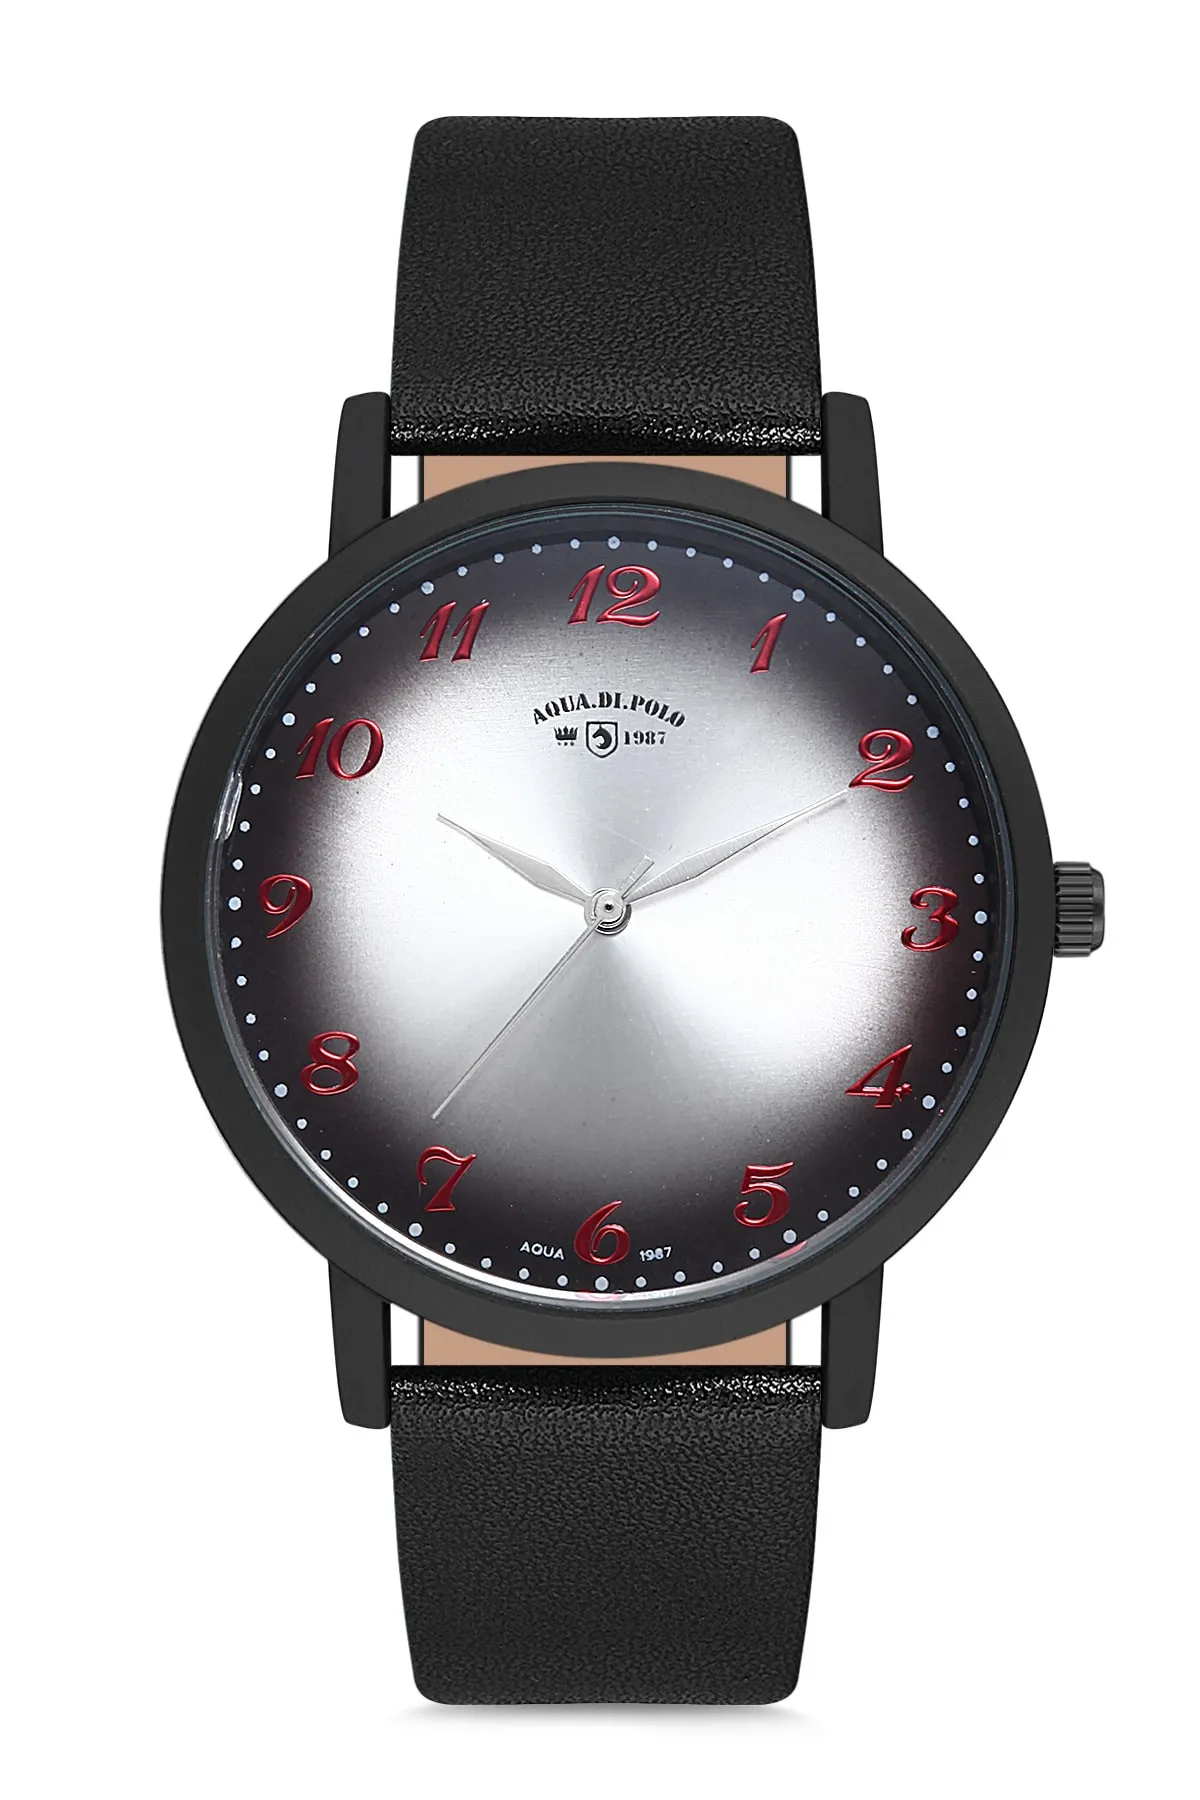 Кожаные наручные часы унисекс Di Polo apwa028202#1